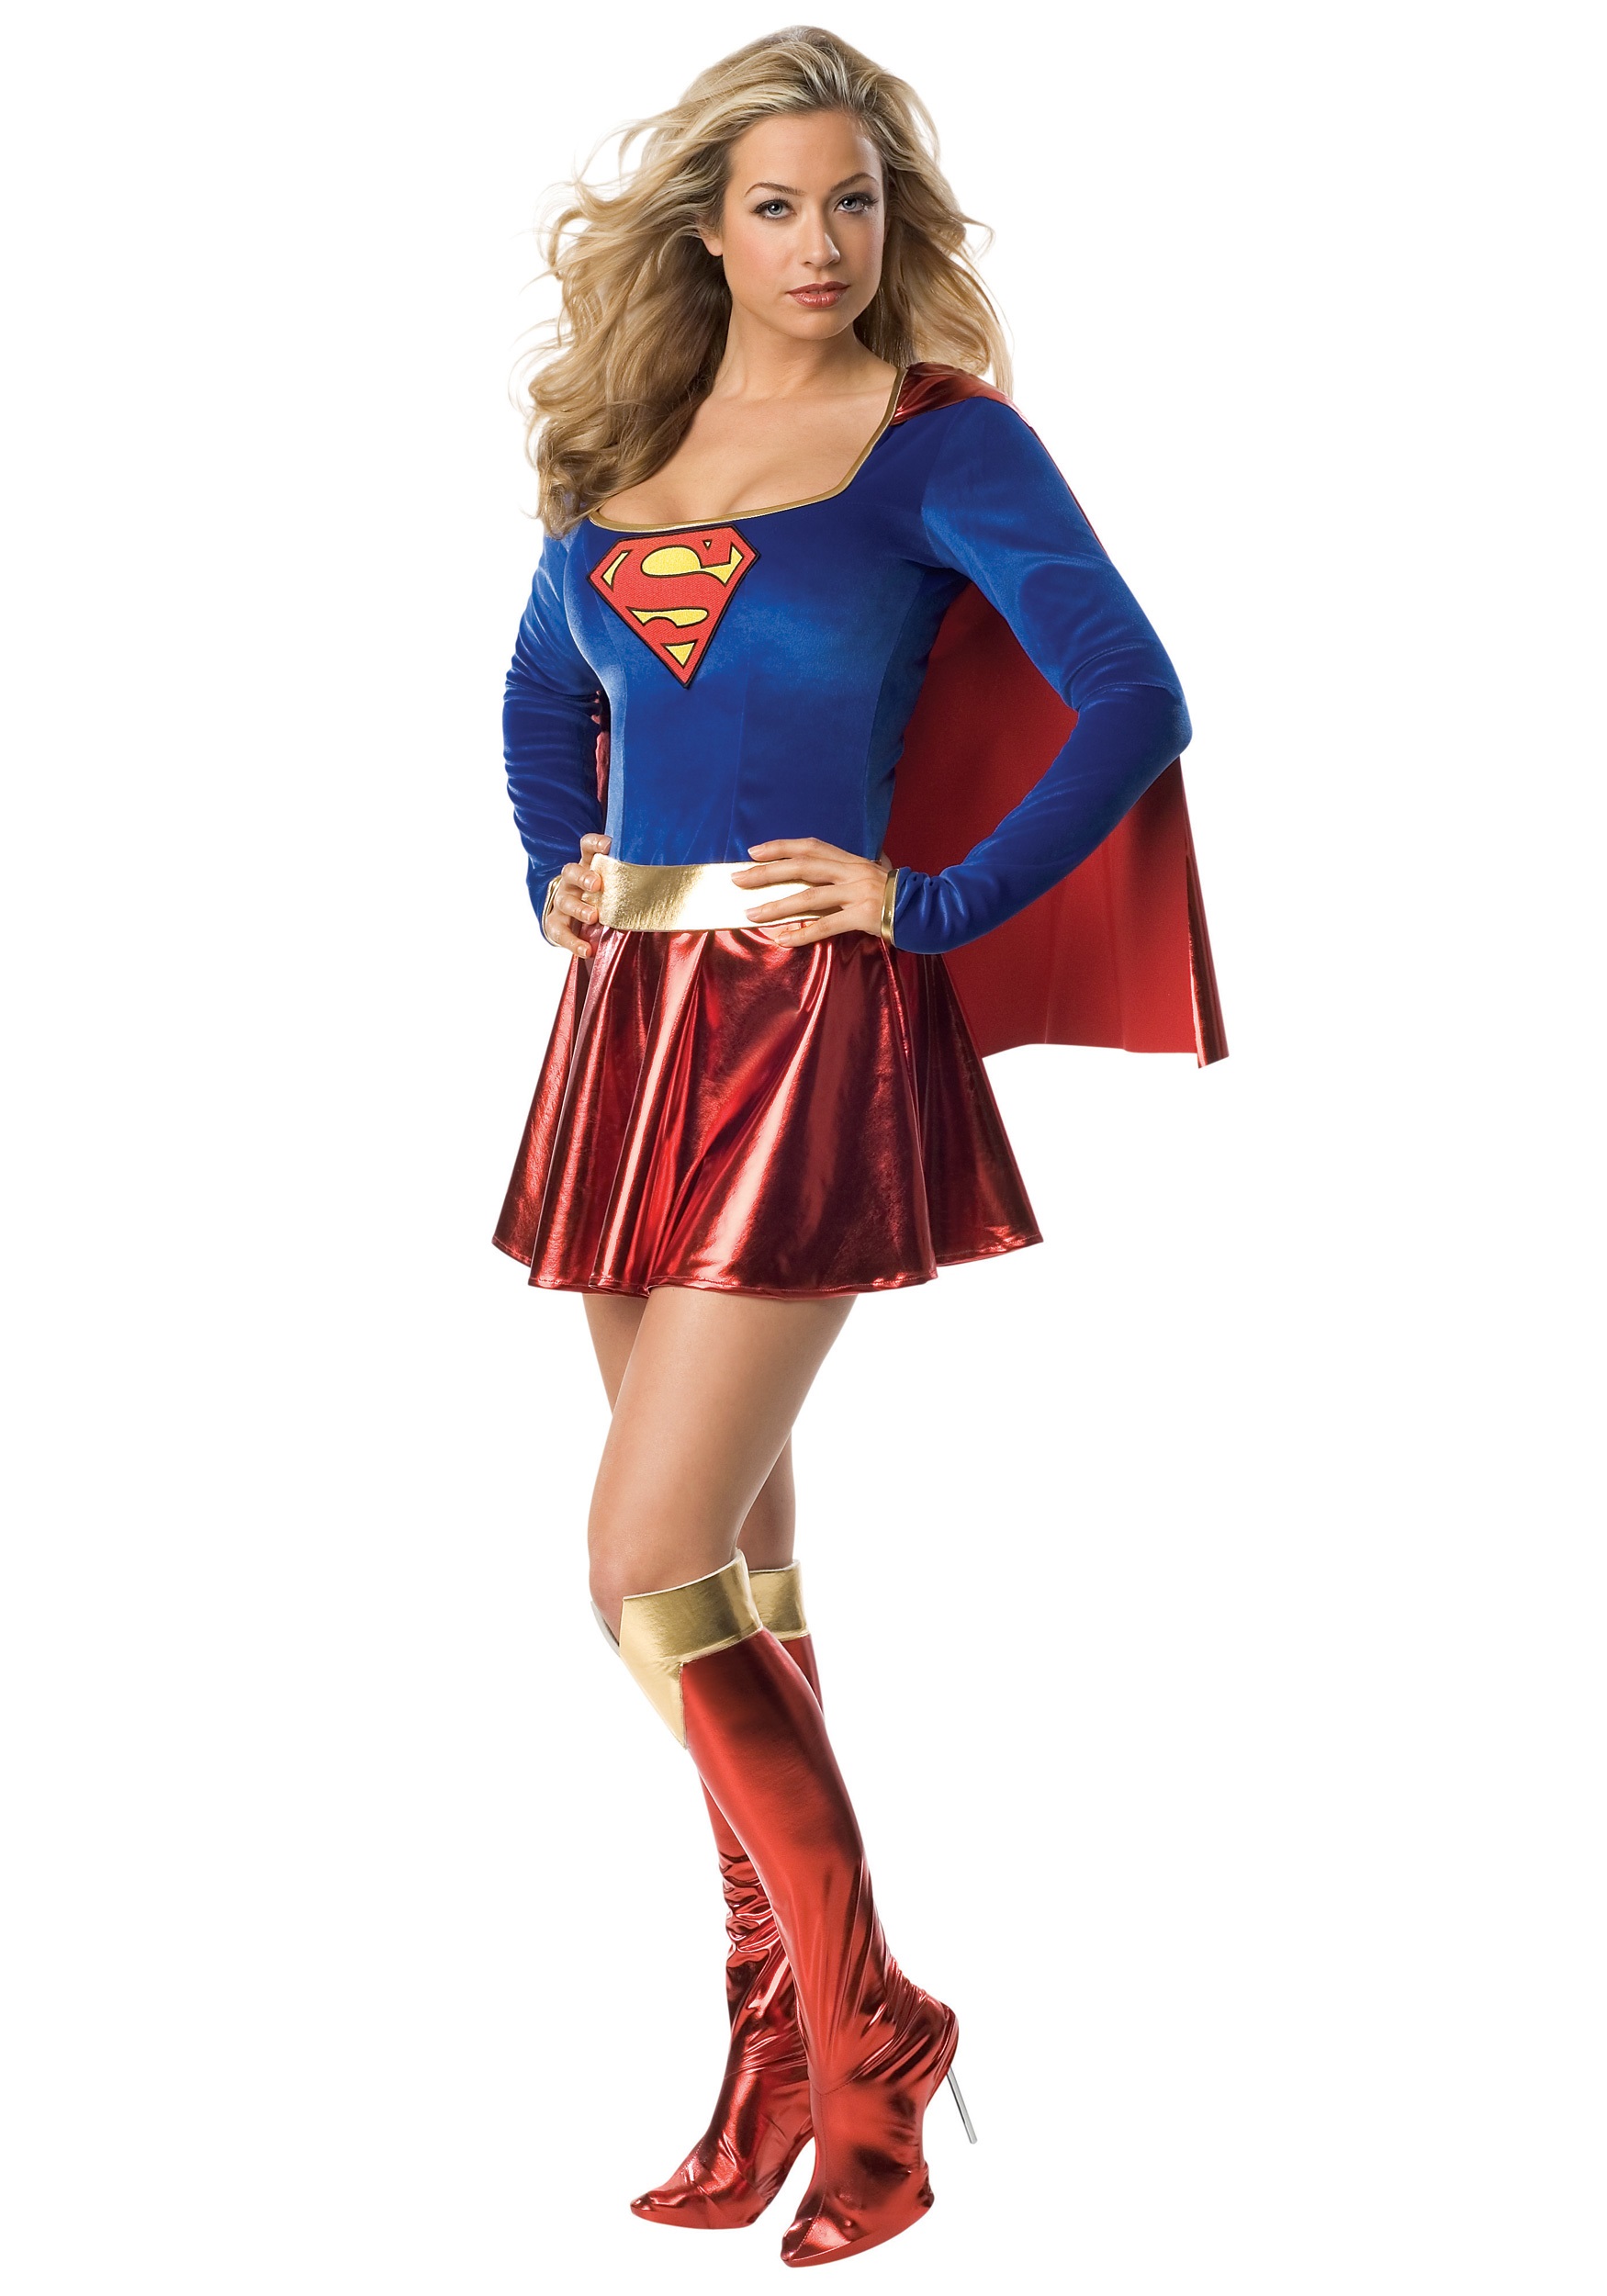 11.) Women's Supergirl TV Costume